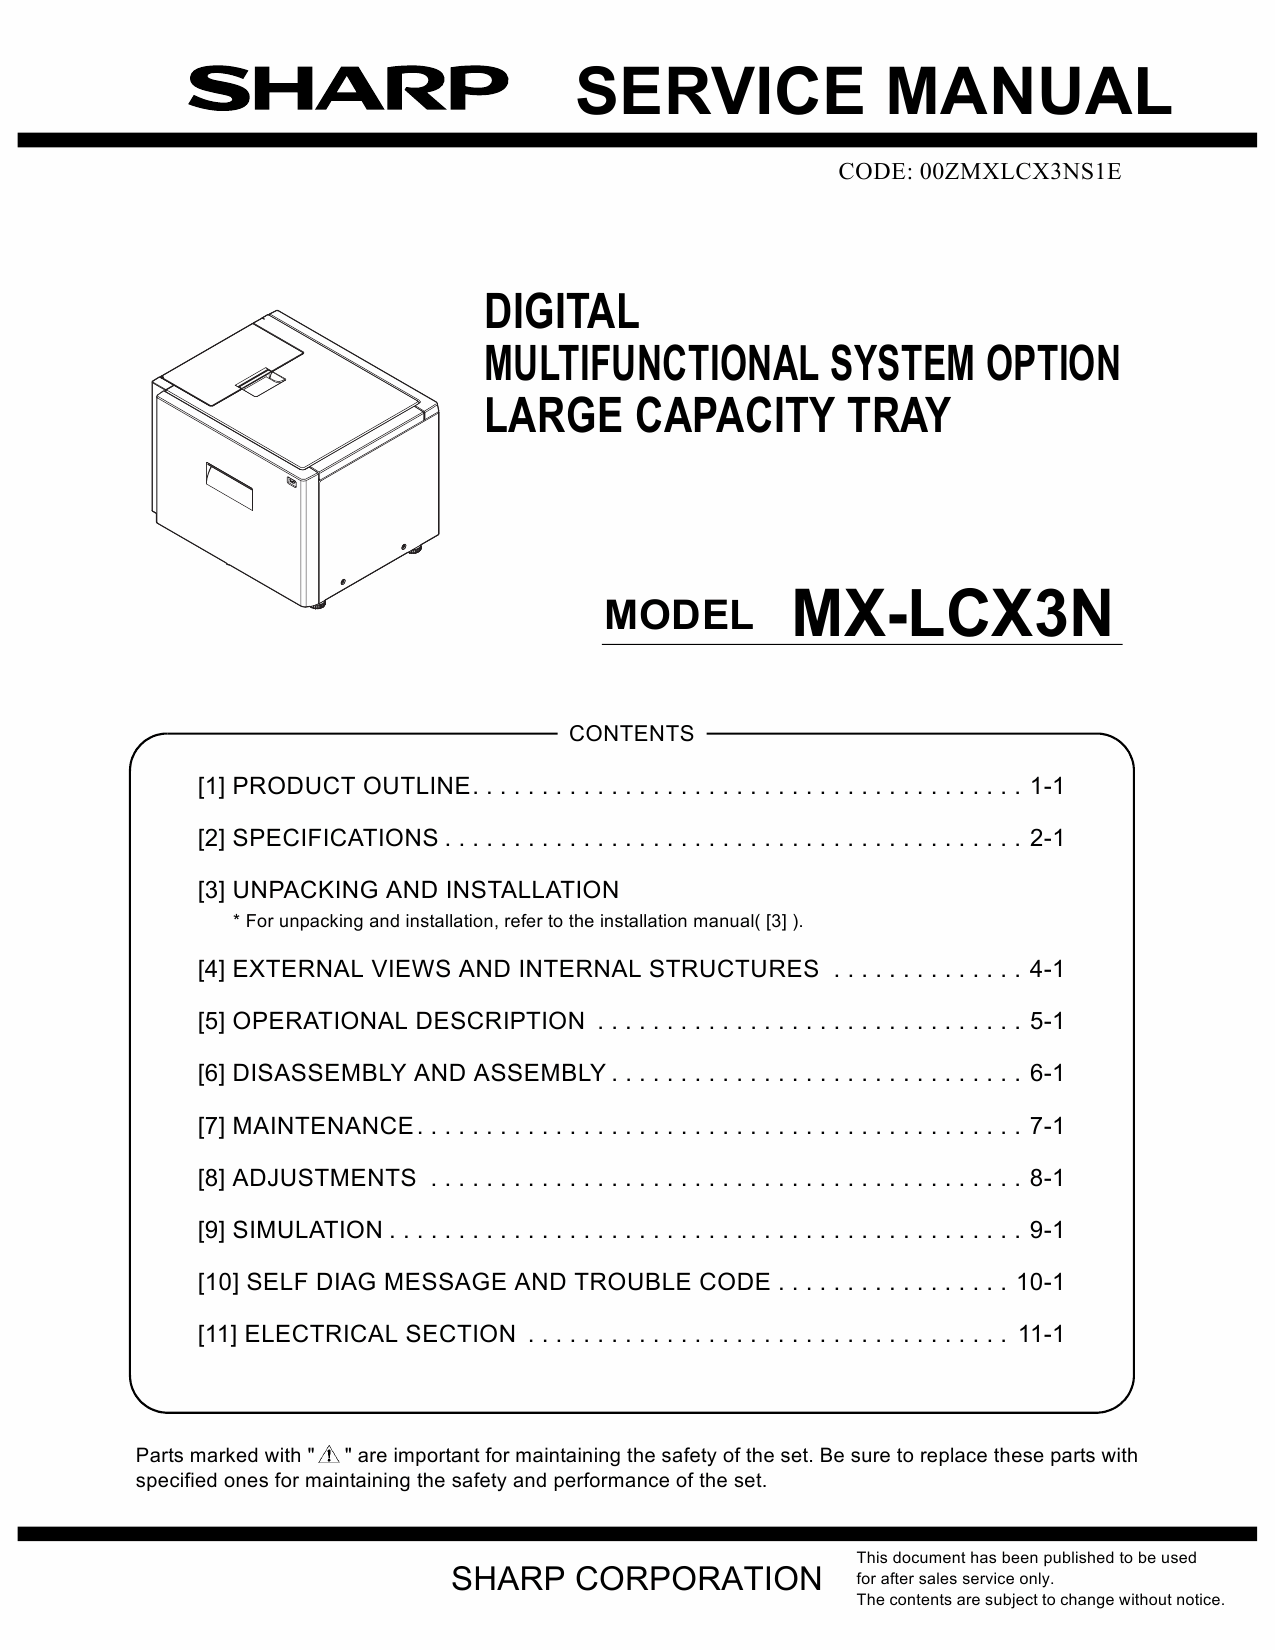 SHARP MX LCX3N Service Manual-1